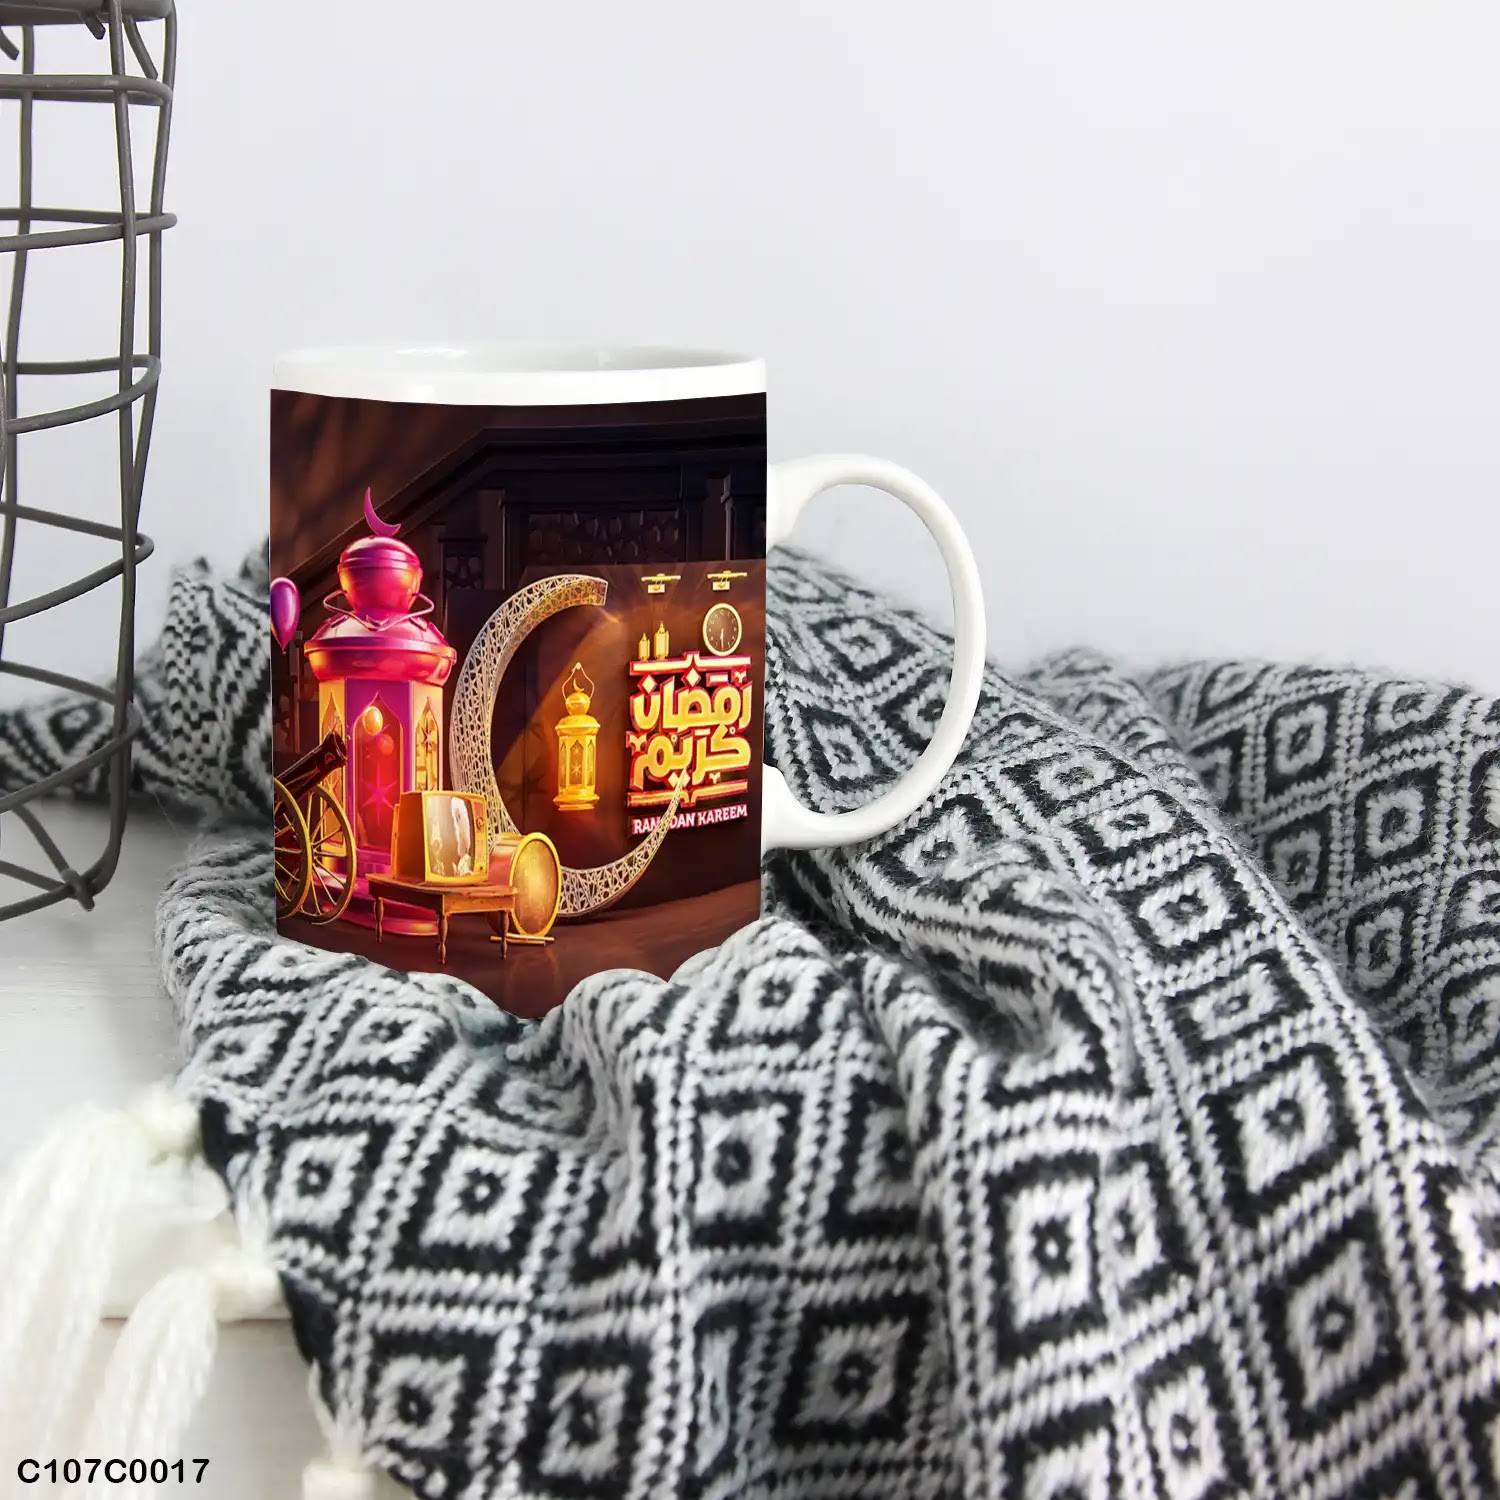 A brown mug (cup) printed with "Ramadan Mubarak"